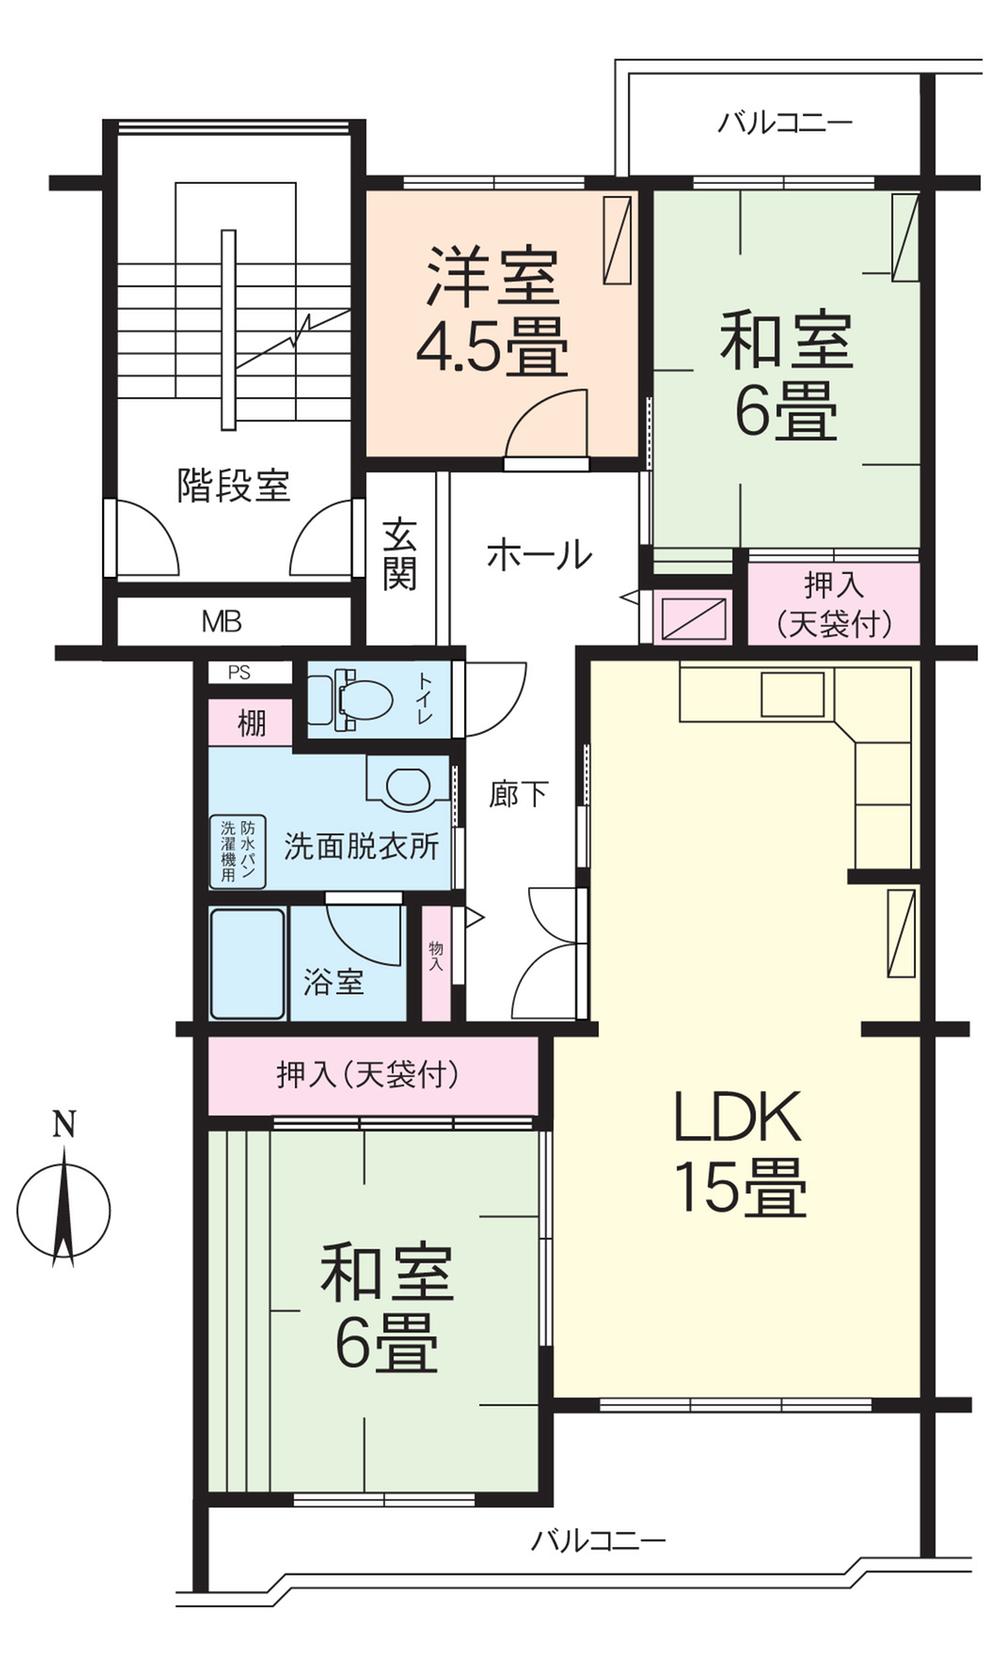 Floor plan. 3LDK, Price 5.8 million yen, Occupied area 78.68 sq m , Balcony area 12.86 sq m